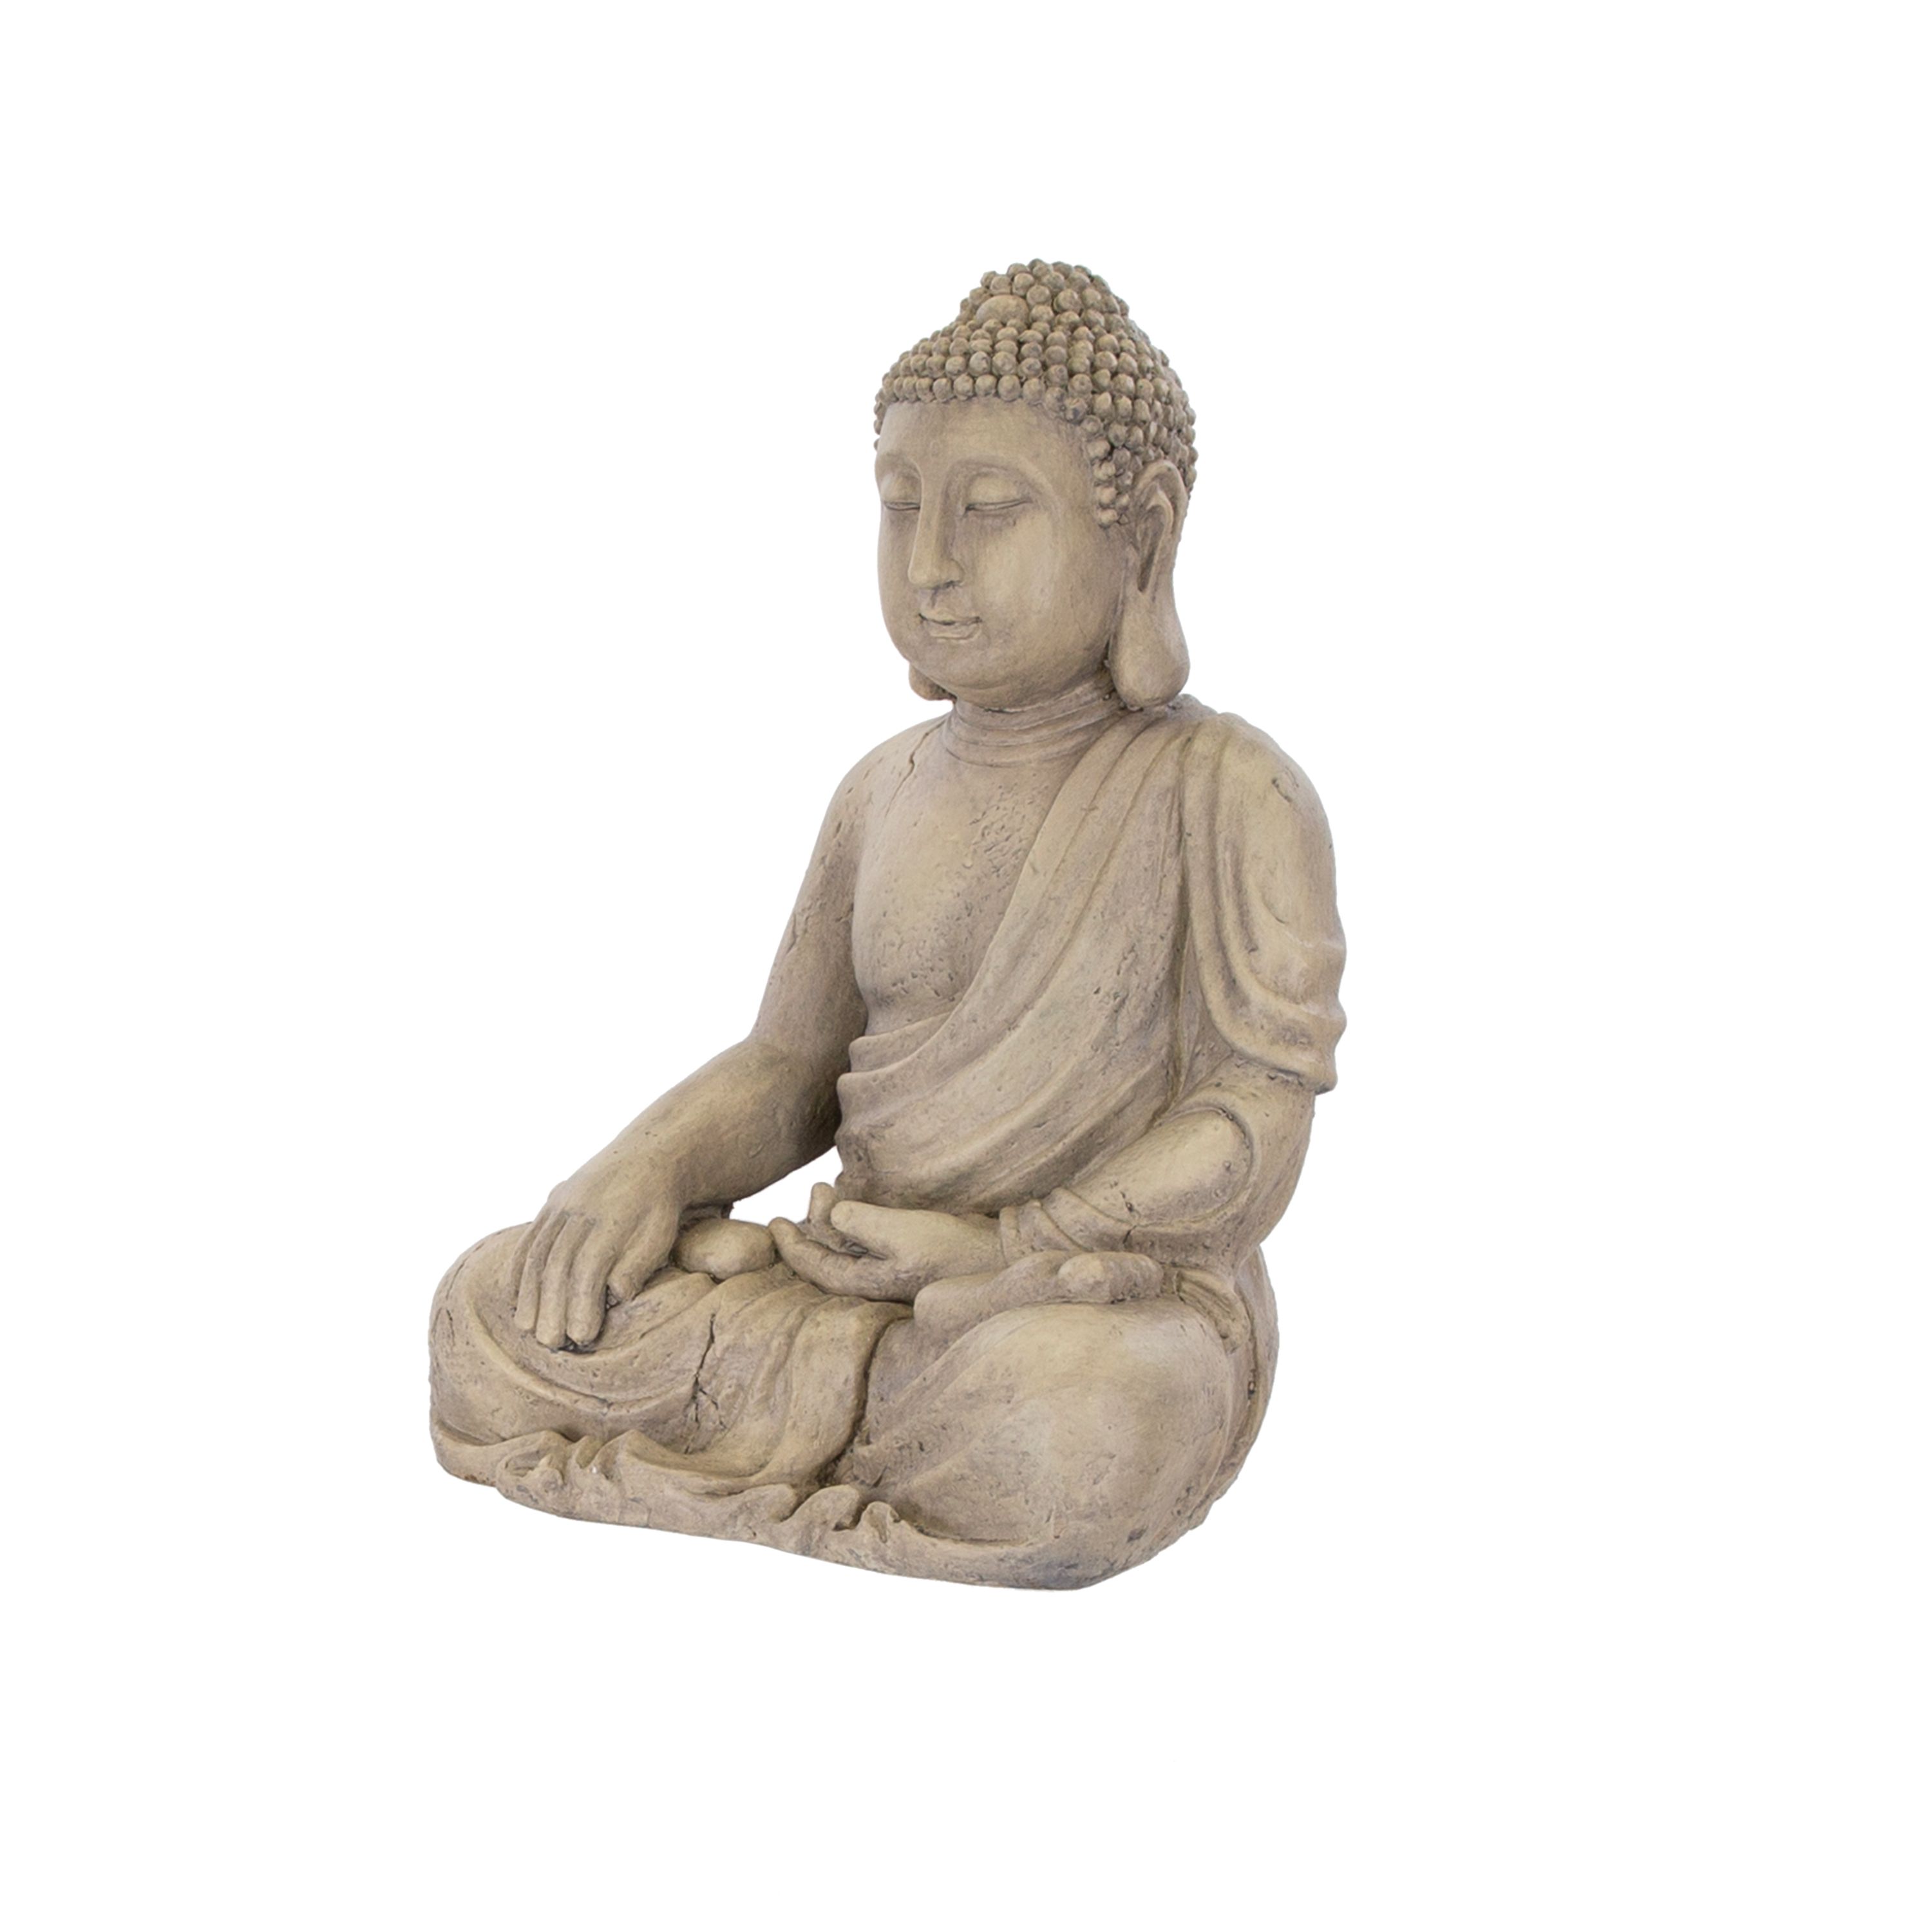 Garden Ornament Sitting Buddha Bronze Stone Zen Effect Outdoor Indoor Statue